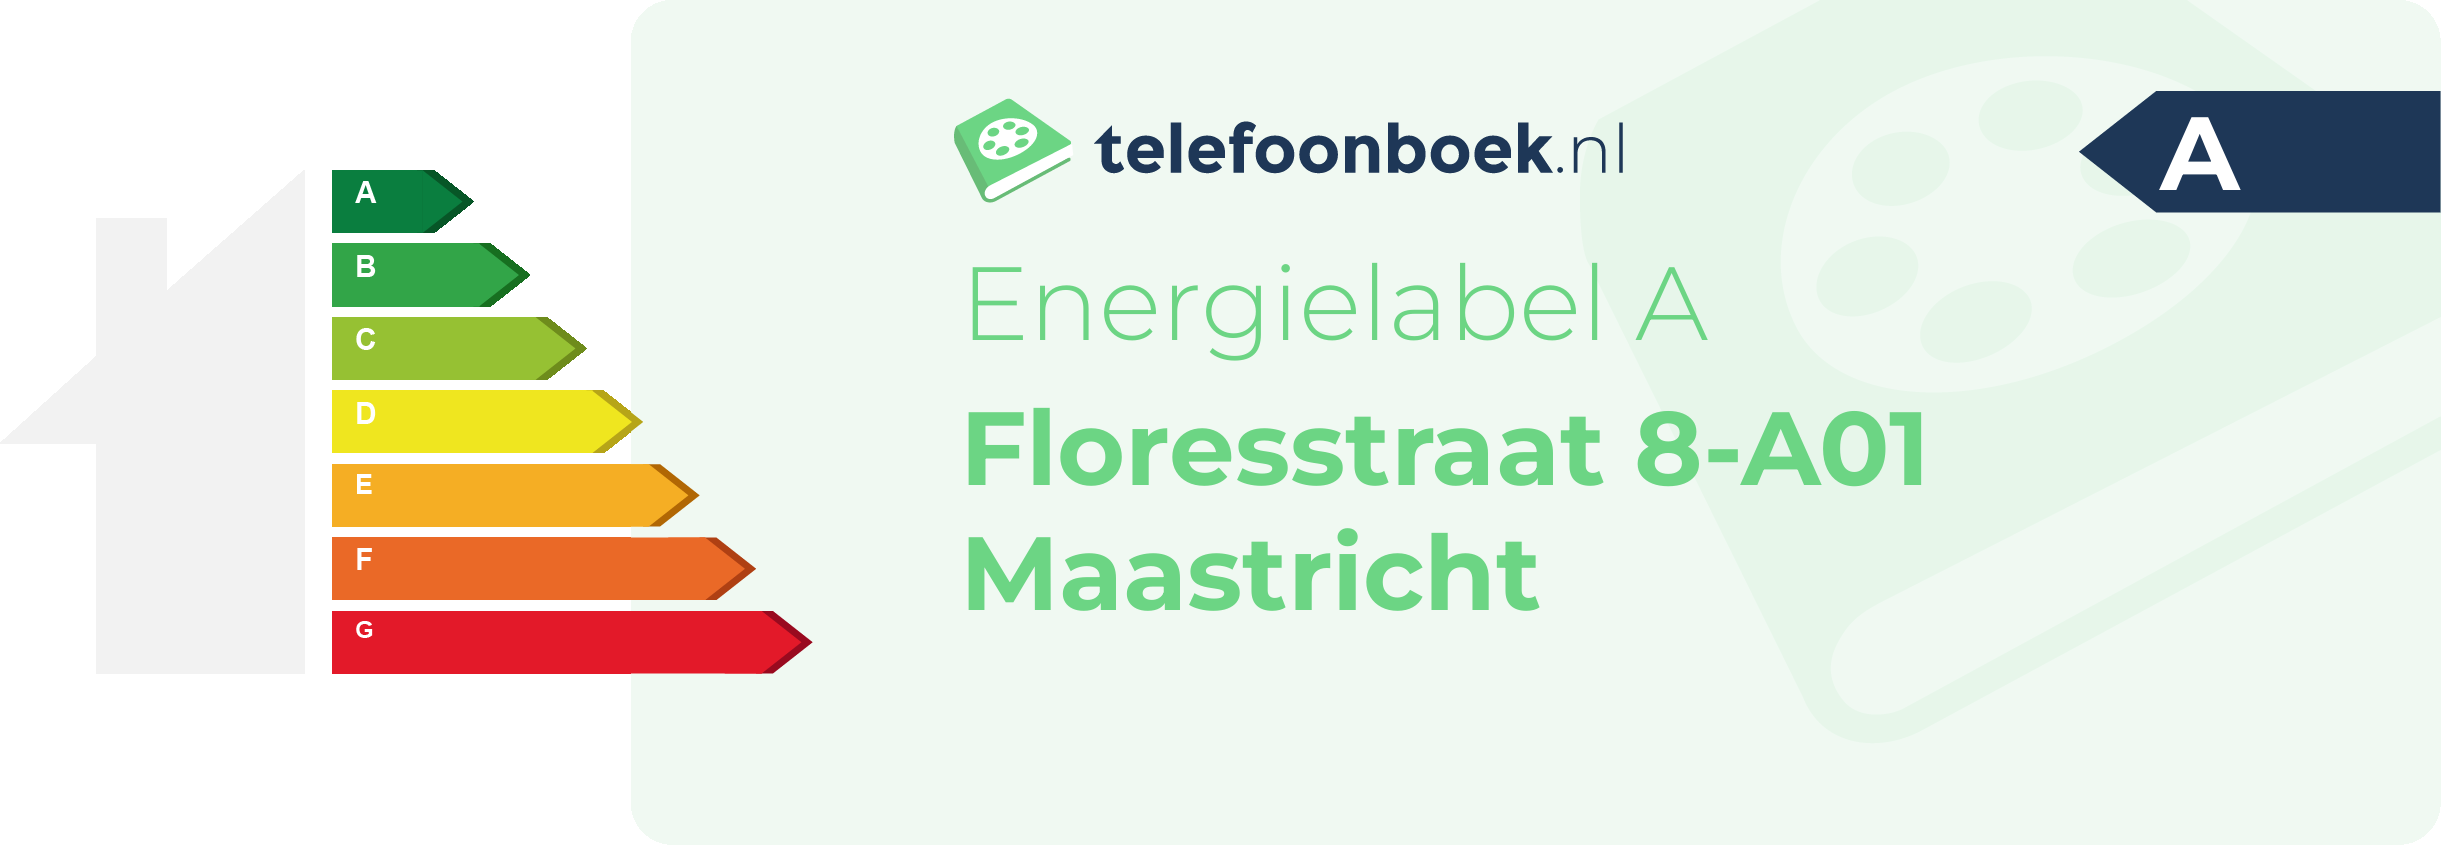 Energielabel Floresstraat 8-A01 Maastricht